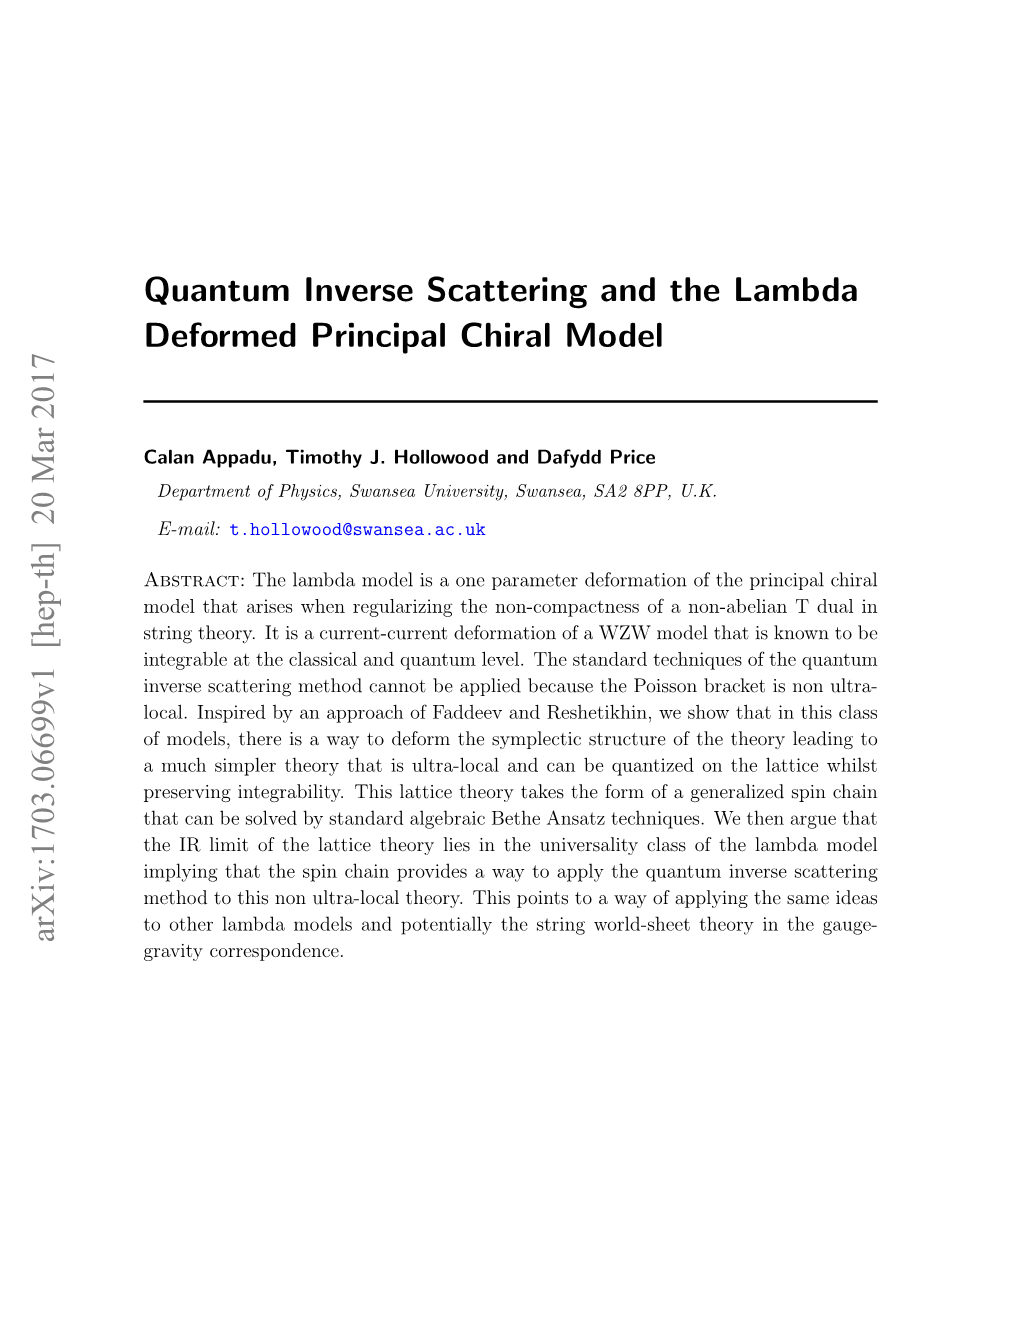 Quantum Inverse Scattering and the Lambda Deformed Principal Chiral Model